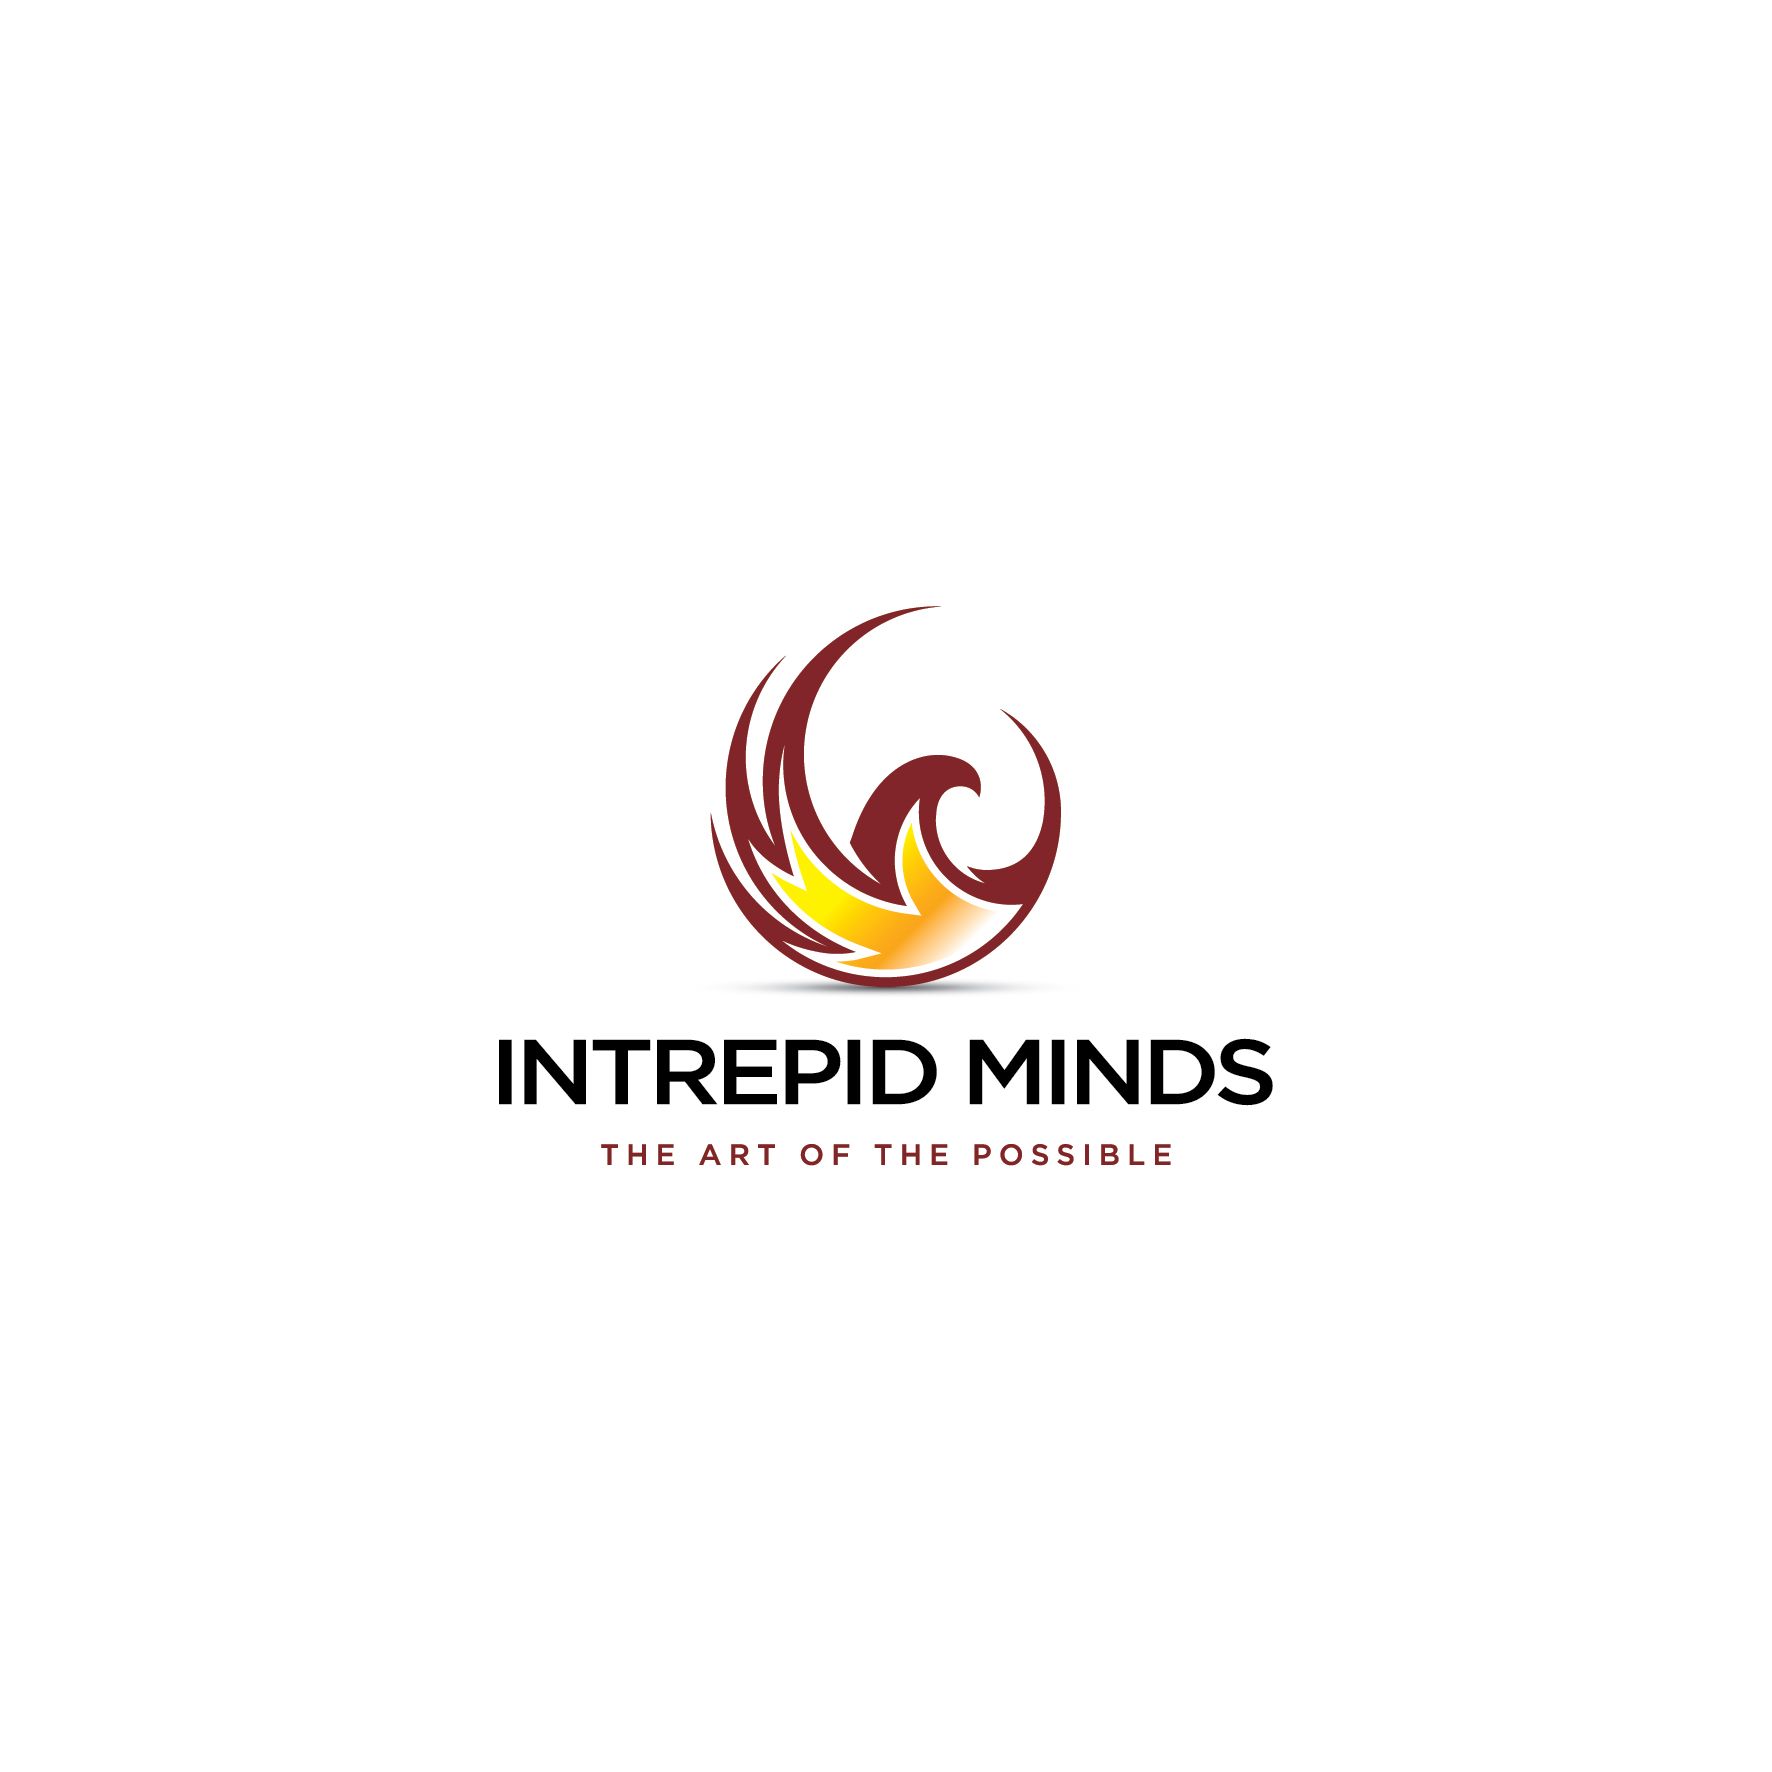 Intrepid Minds